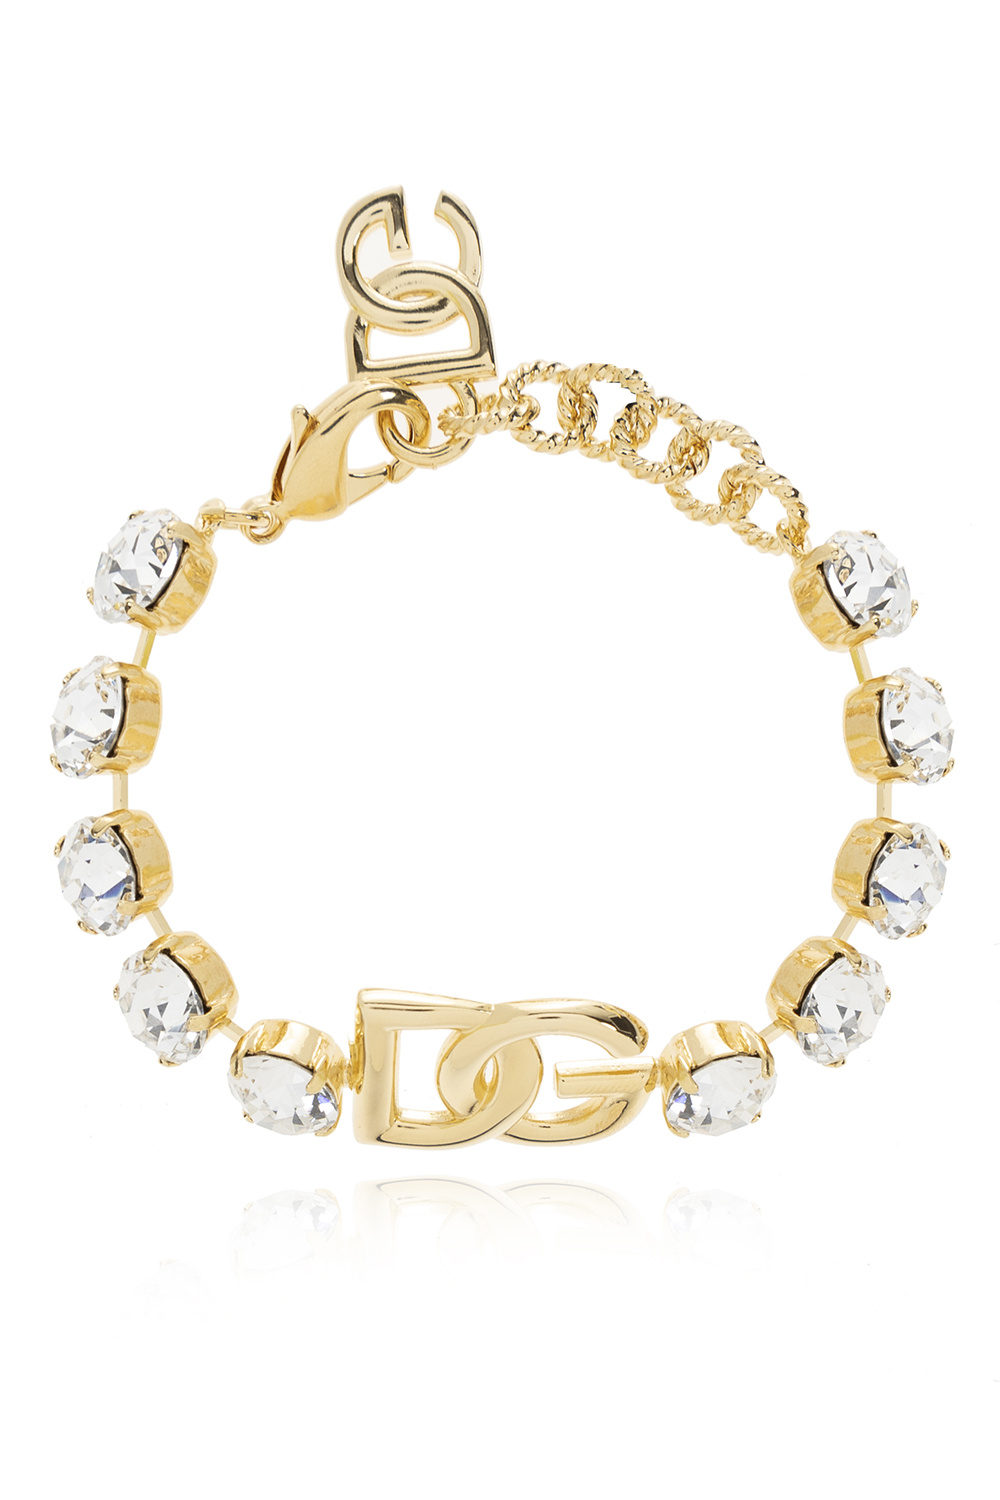 Buy Exclusive Dolce  Gabbana Bracelets  82 products  FASHIOLAin